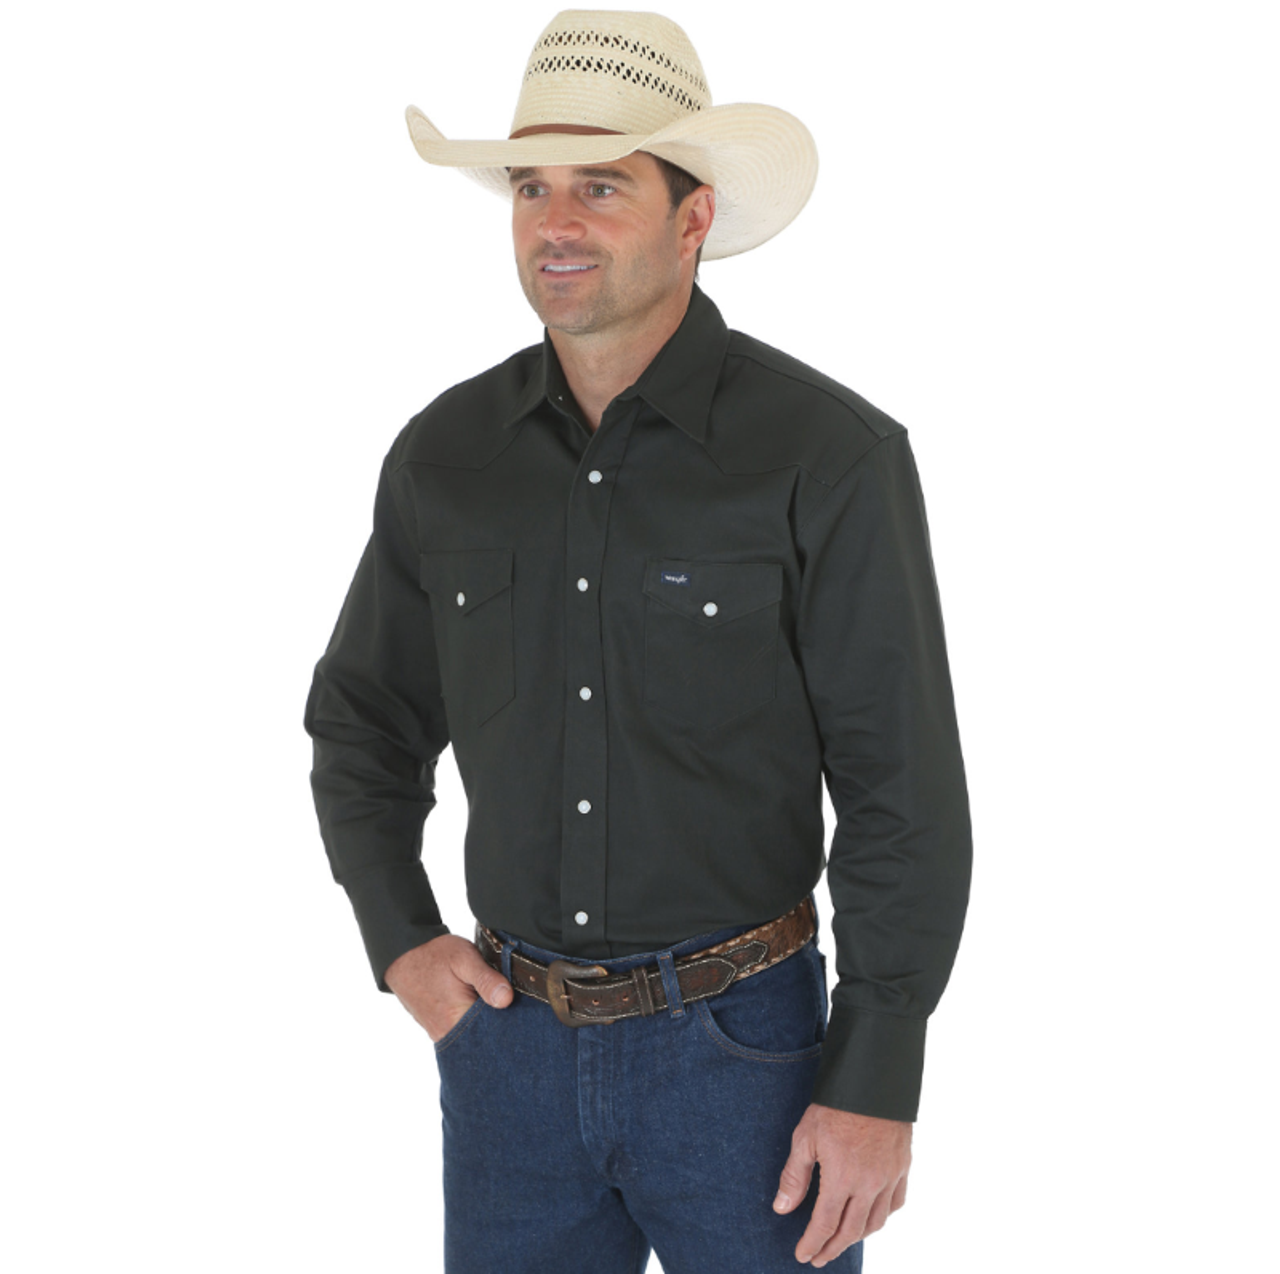 Men's Authentic Cowboy Cut Khaki Work Shirt